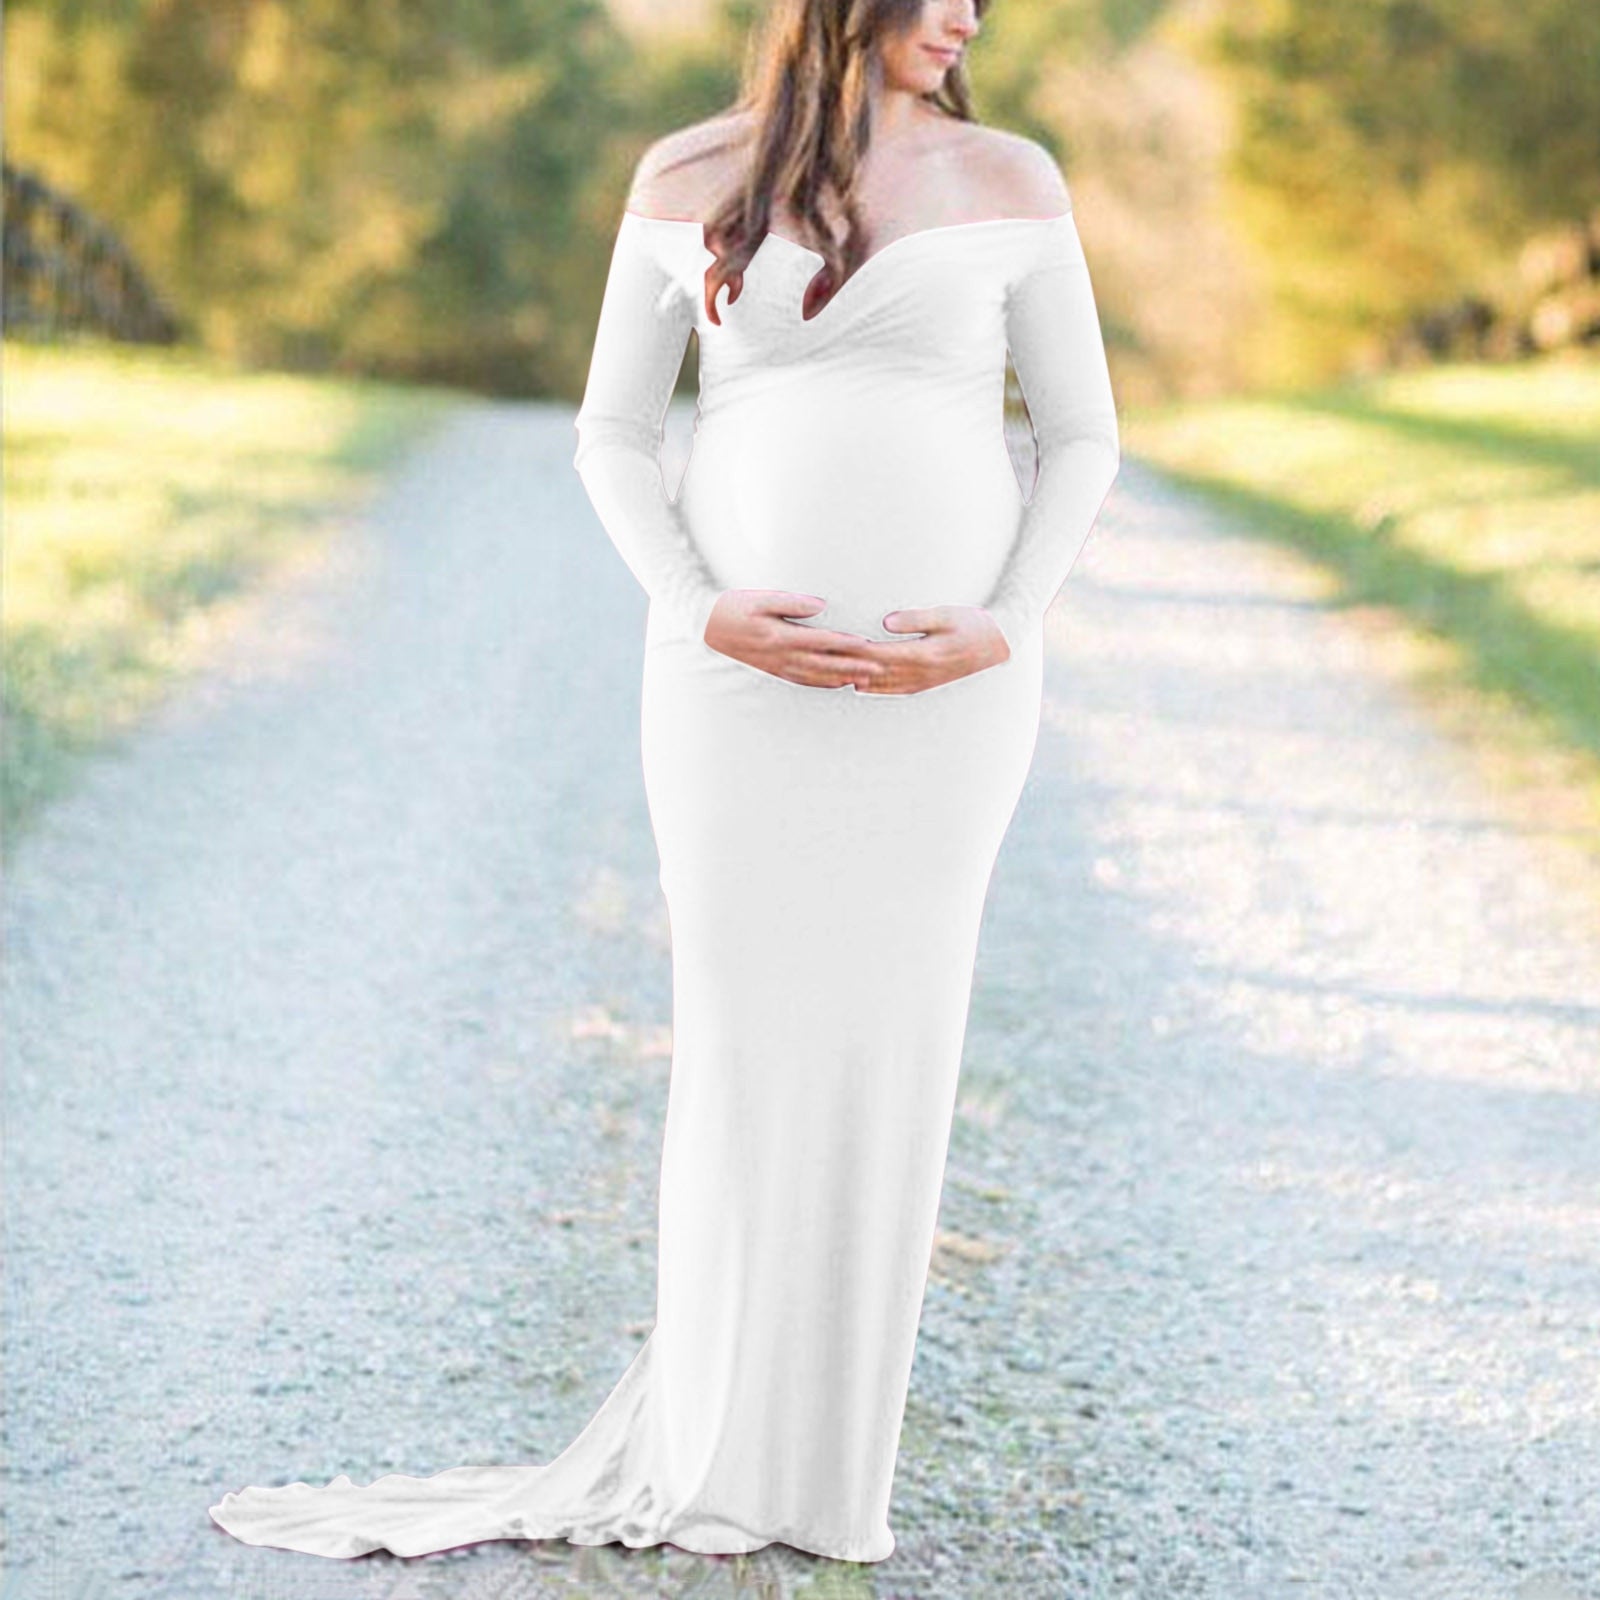 Maternity Dress for Photo Shoot, Women Long Sleeve Solid Off Shoulder Dress